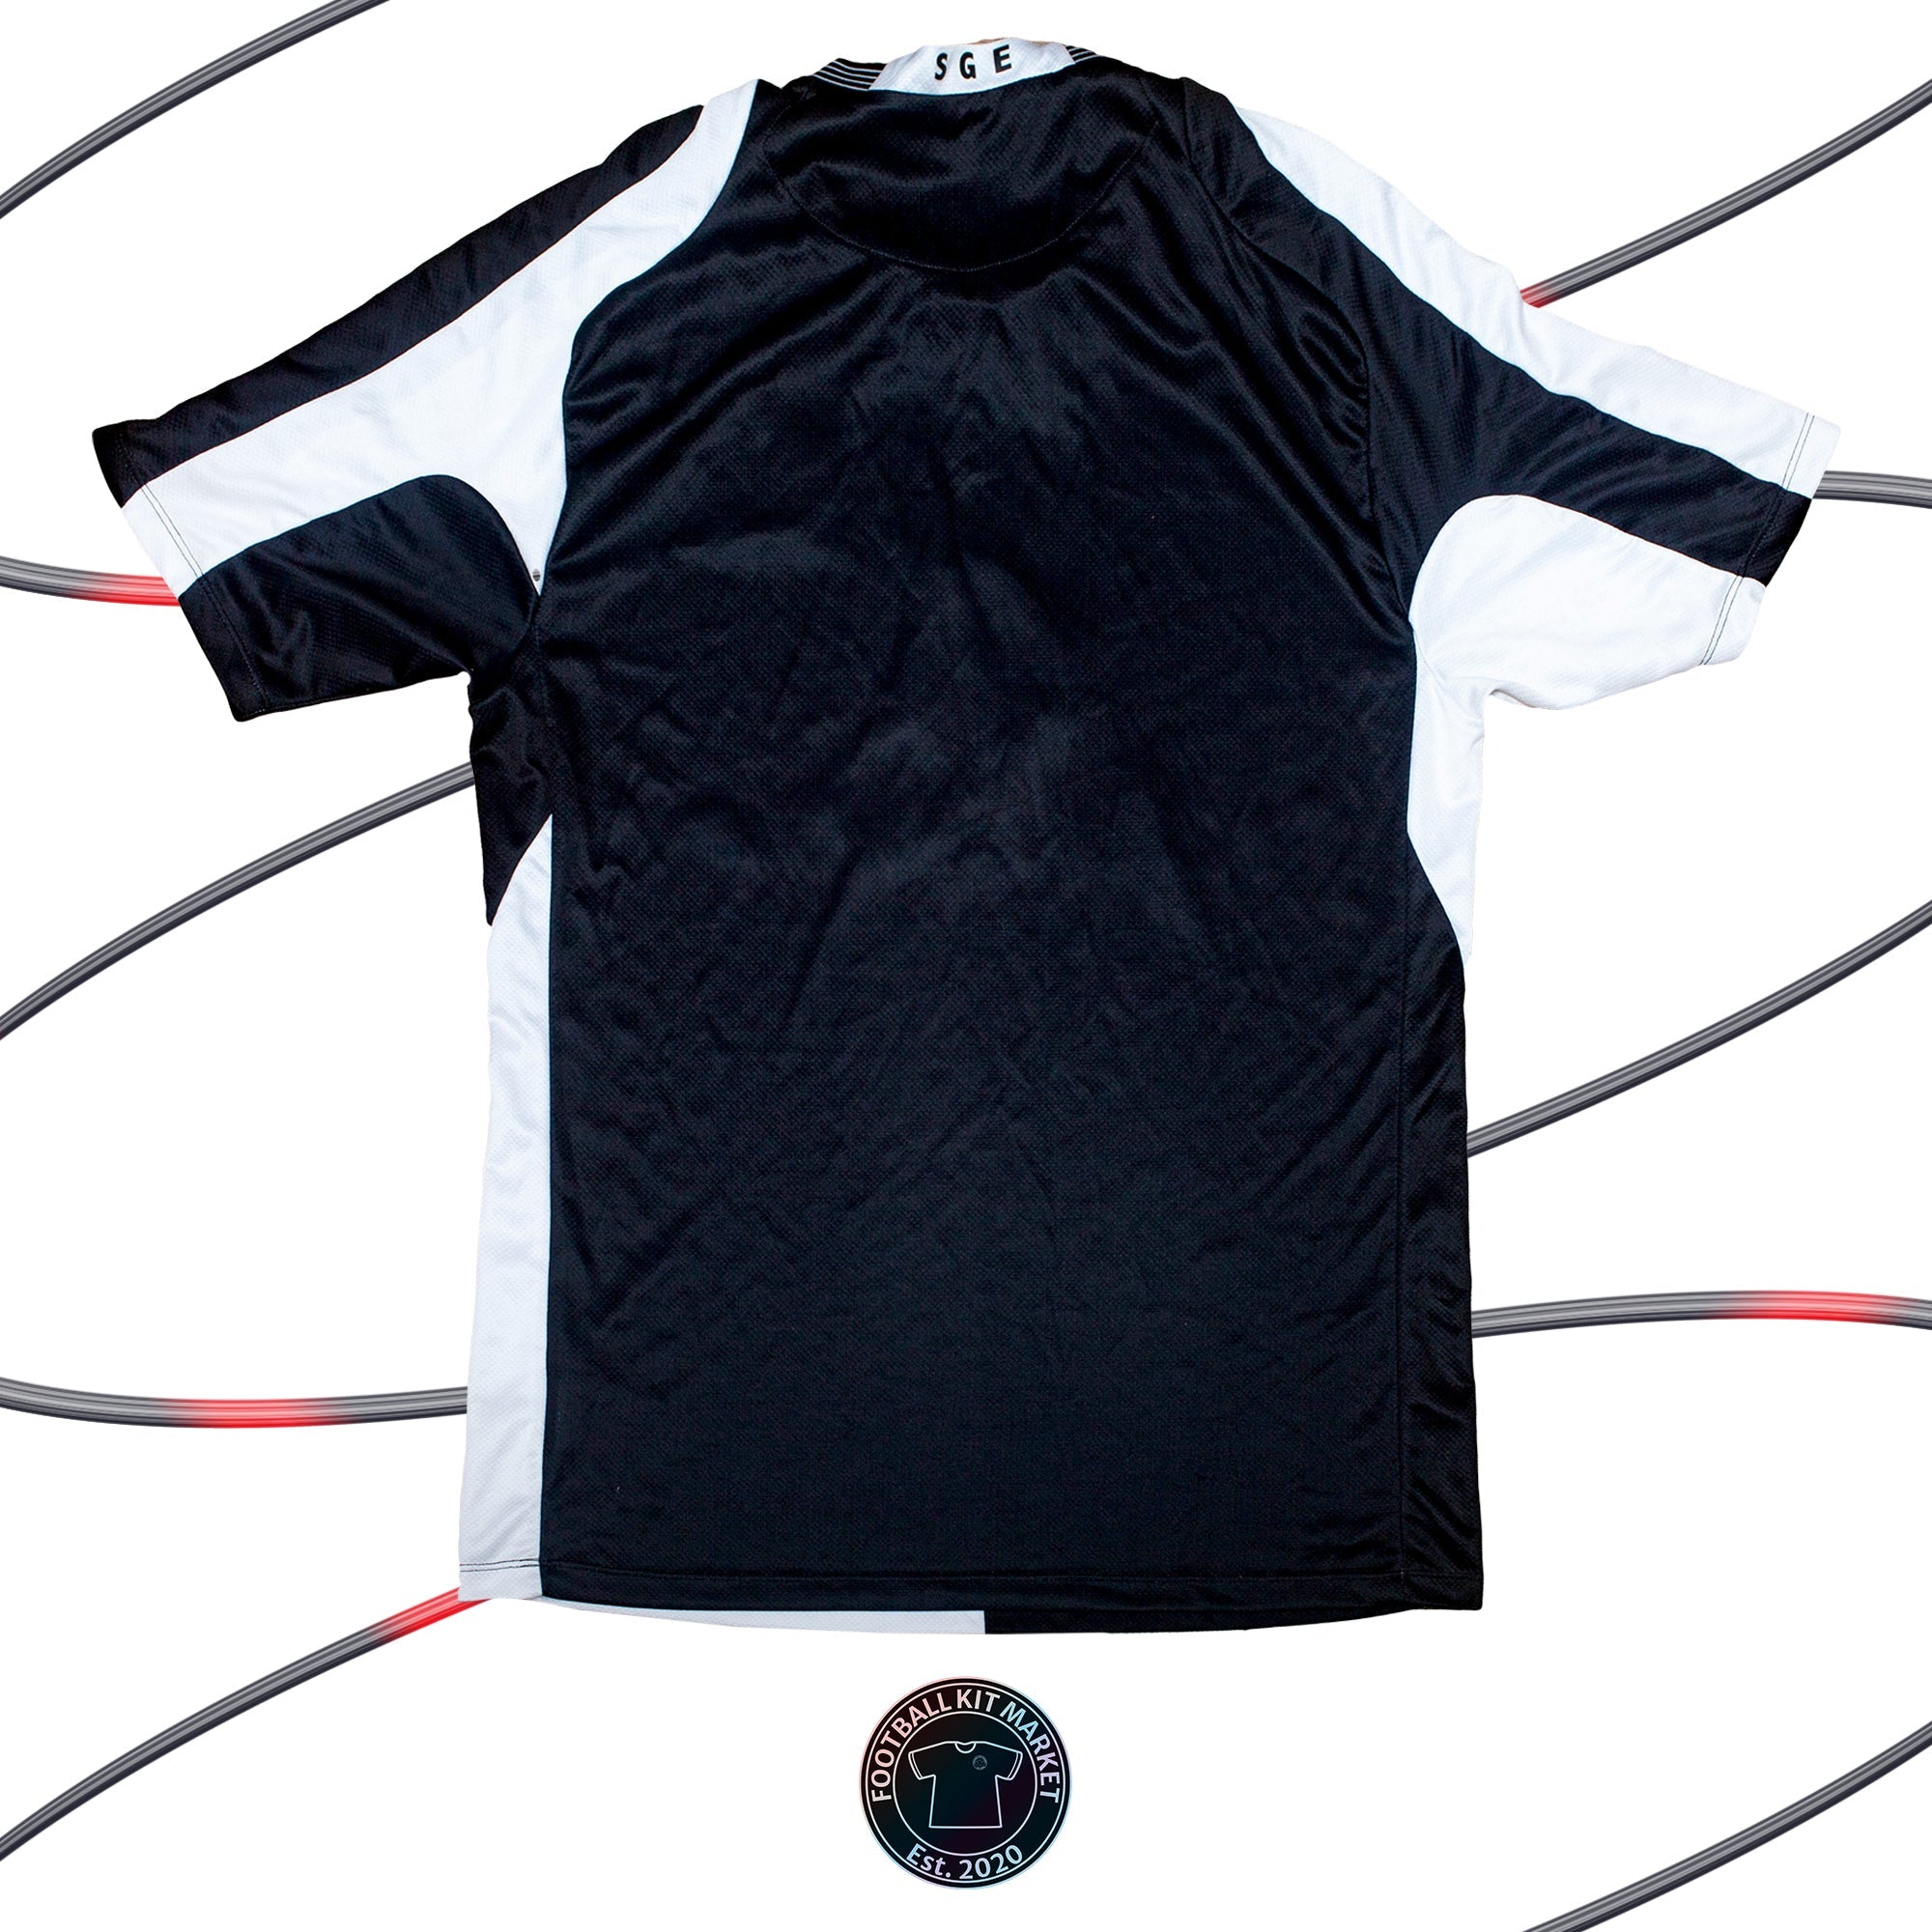 Genuine EINTRACHT FRANKFURT Away Shirt (2013-2014) - JAKO (XL) - Product Image from Football Kit Market